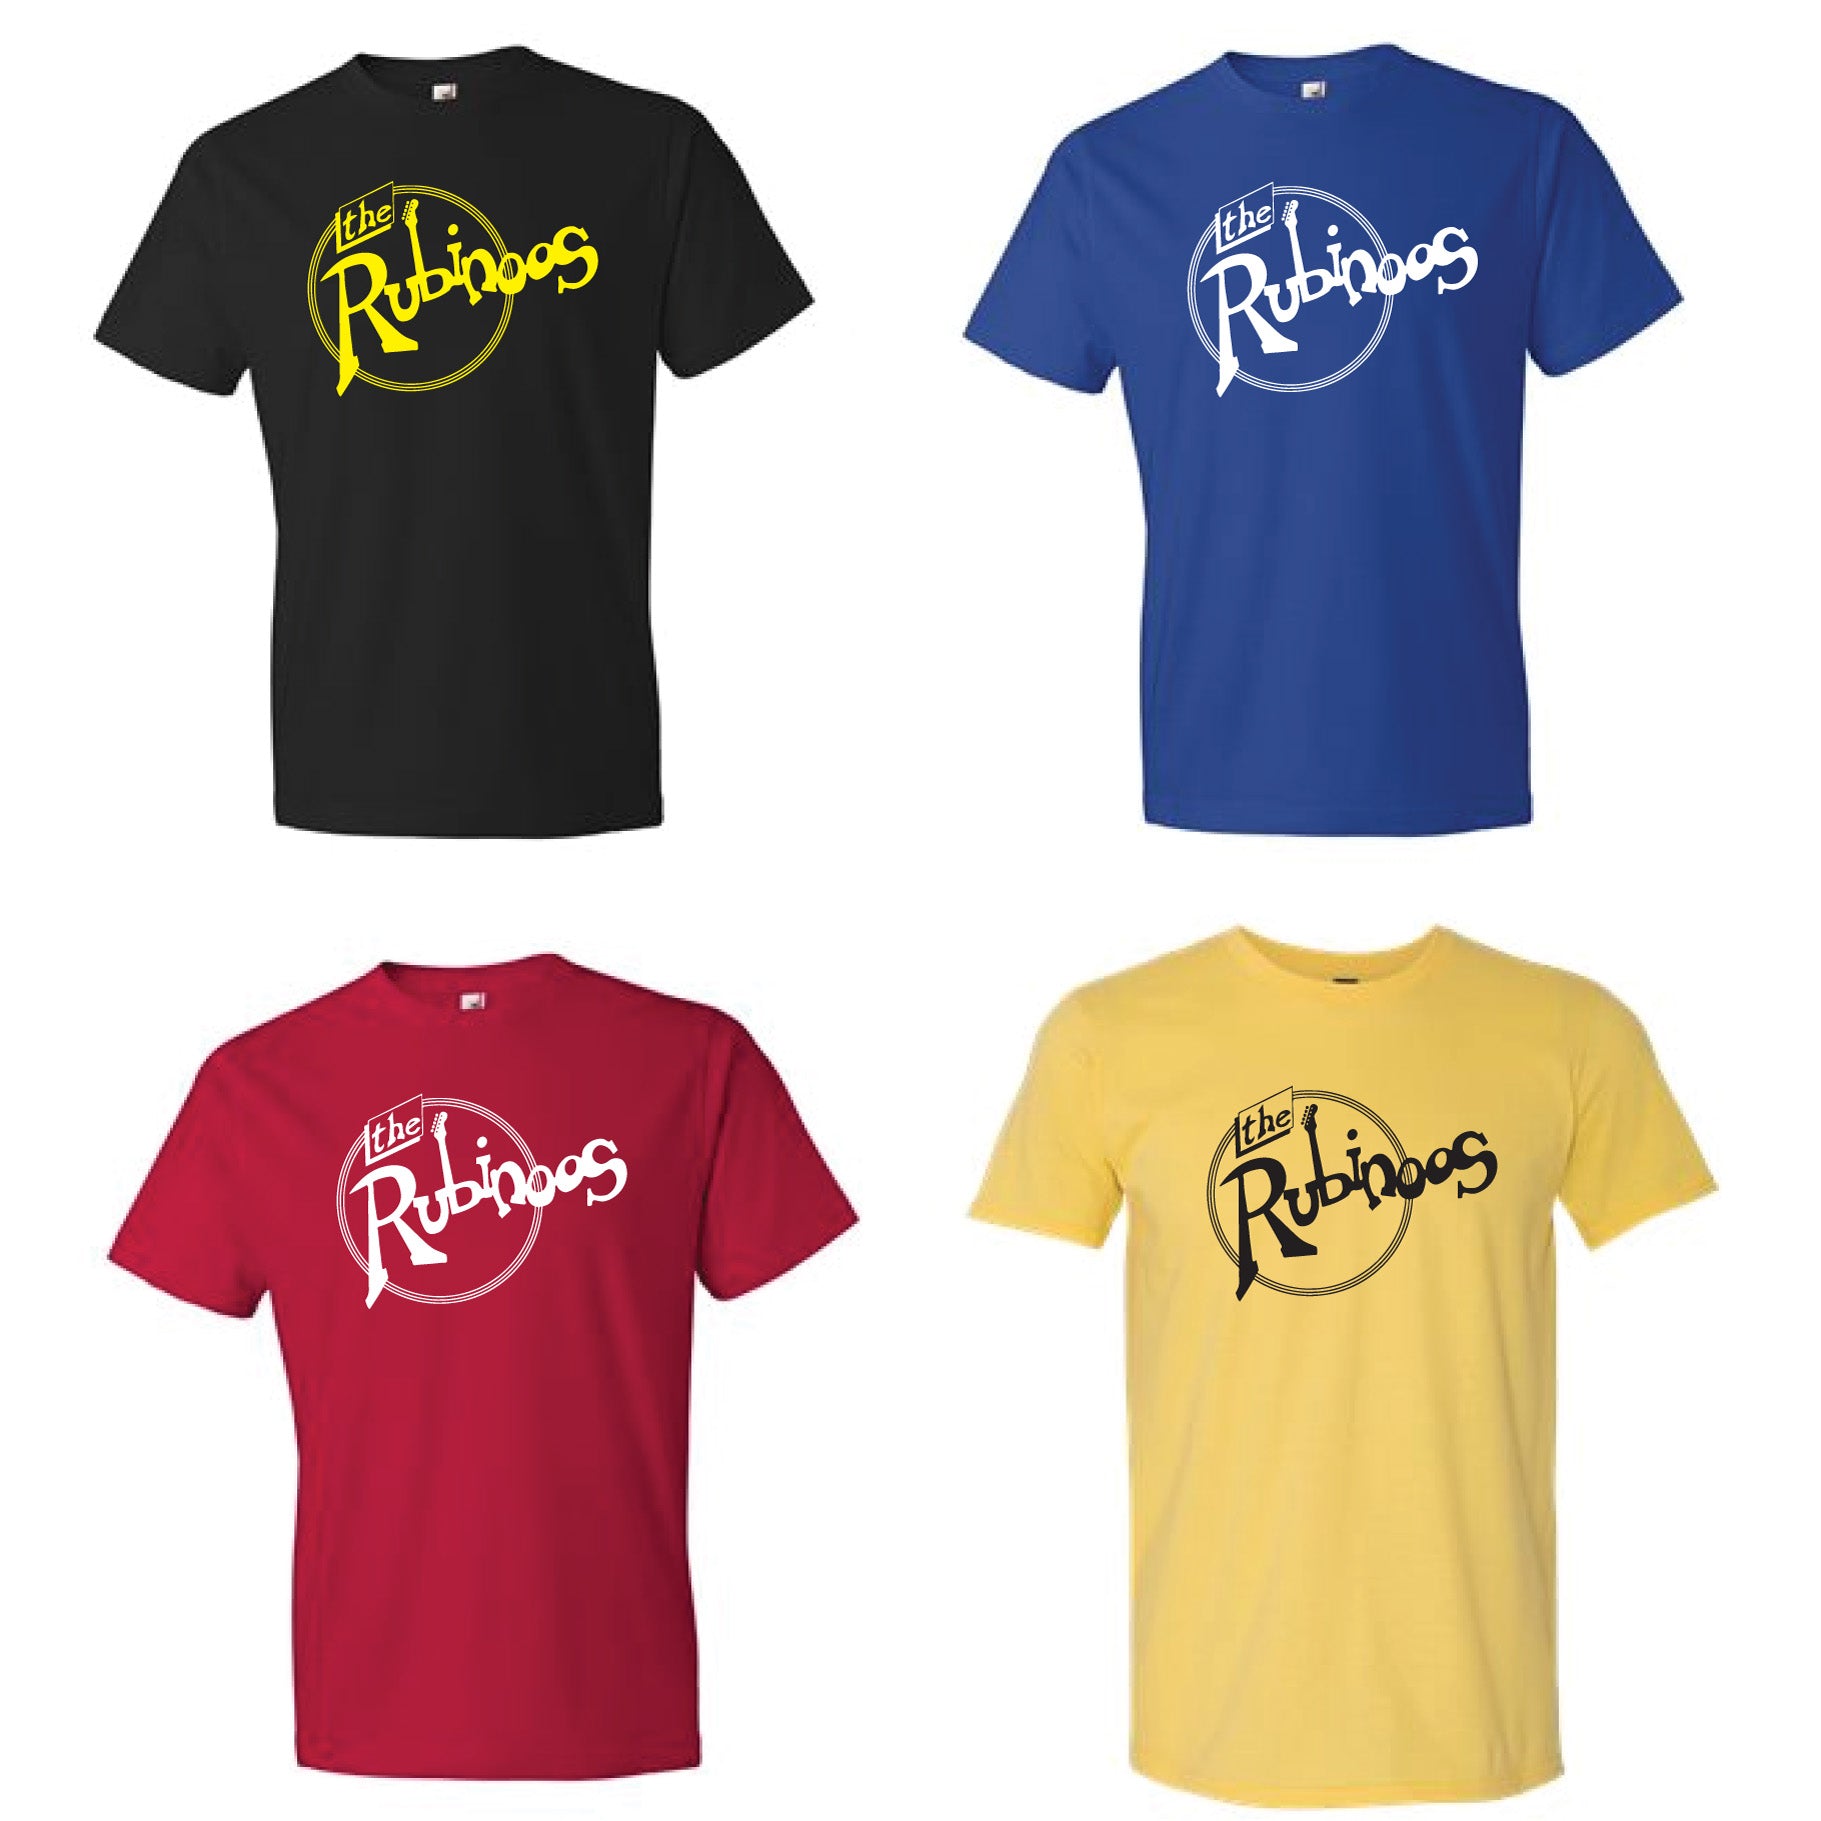 Rubinoos T-shirt - yellow on black